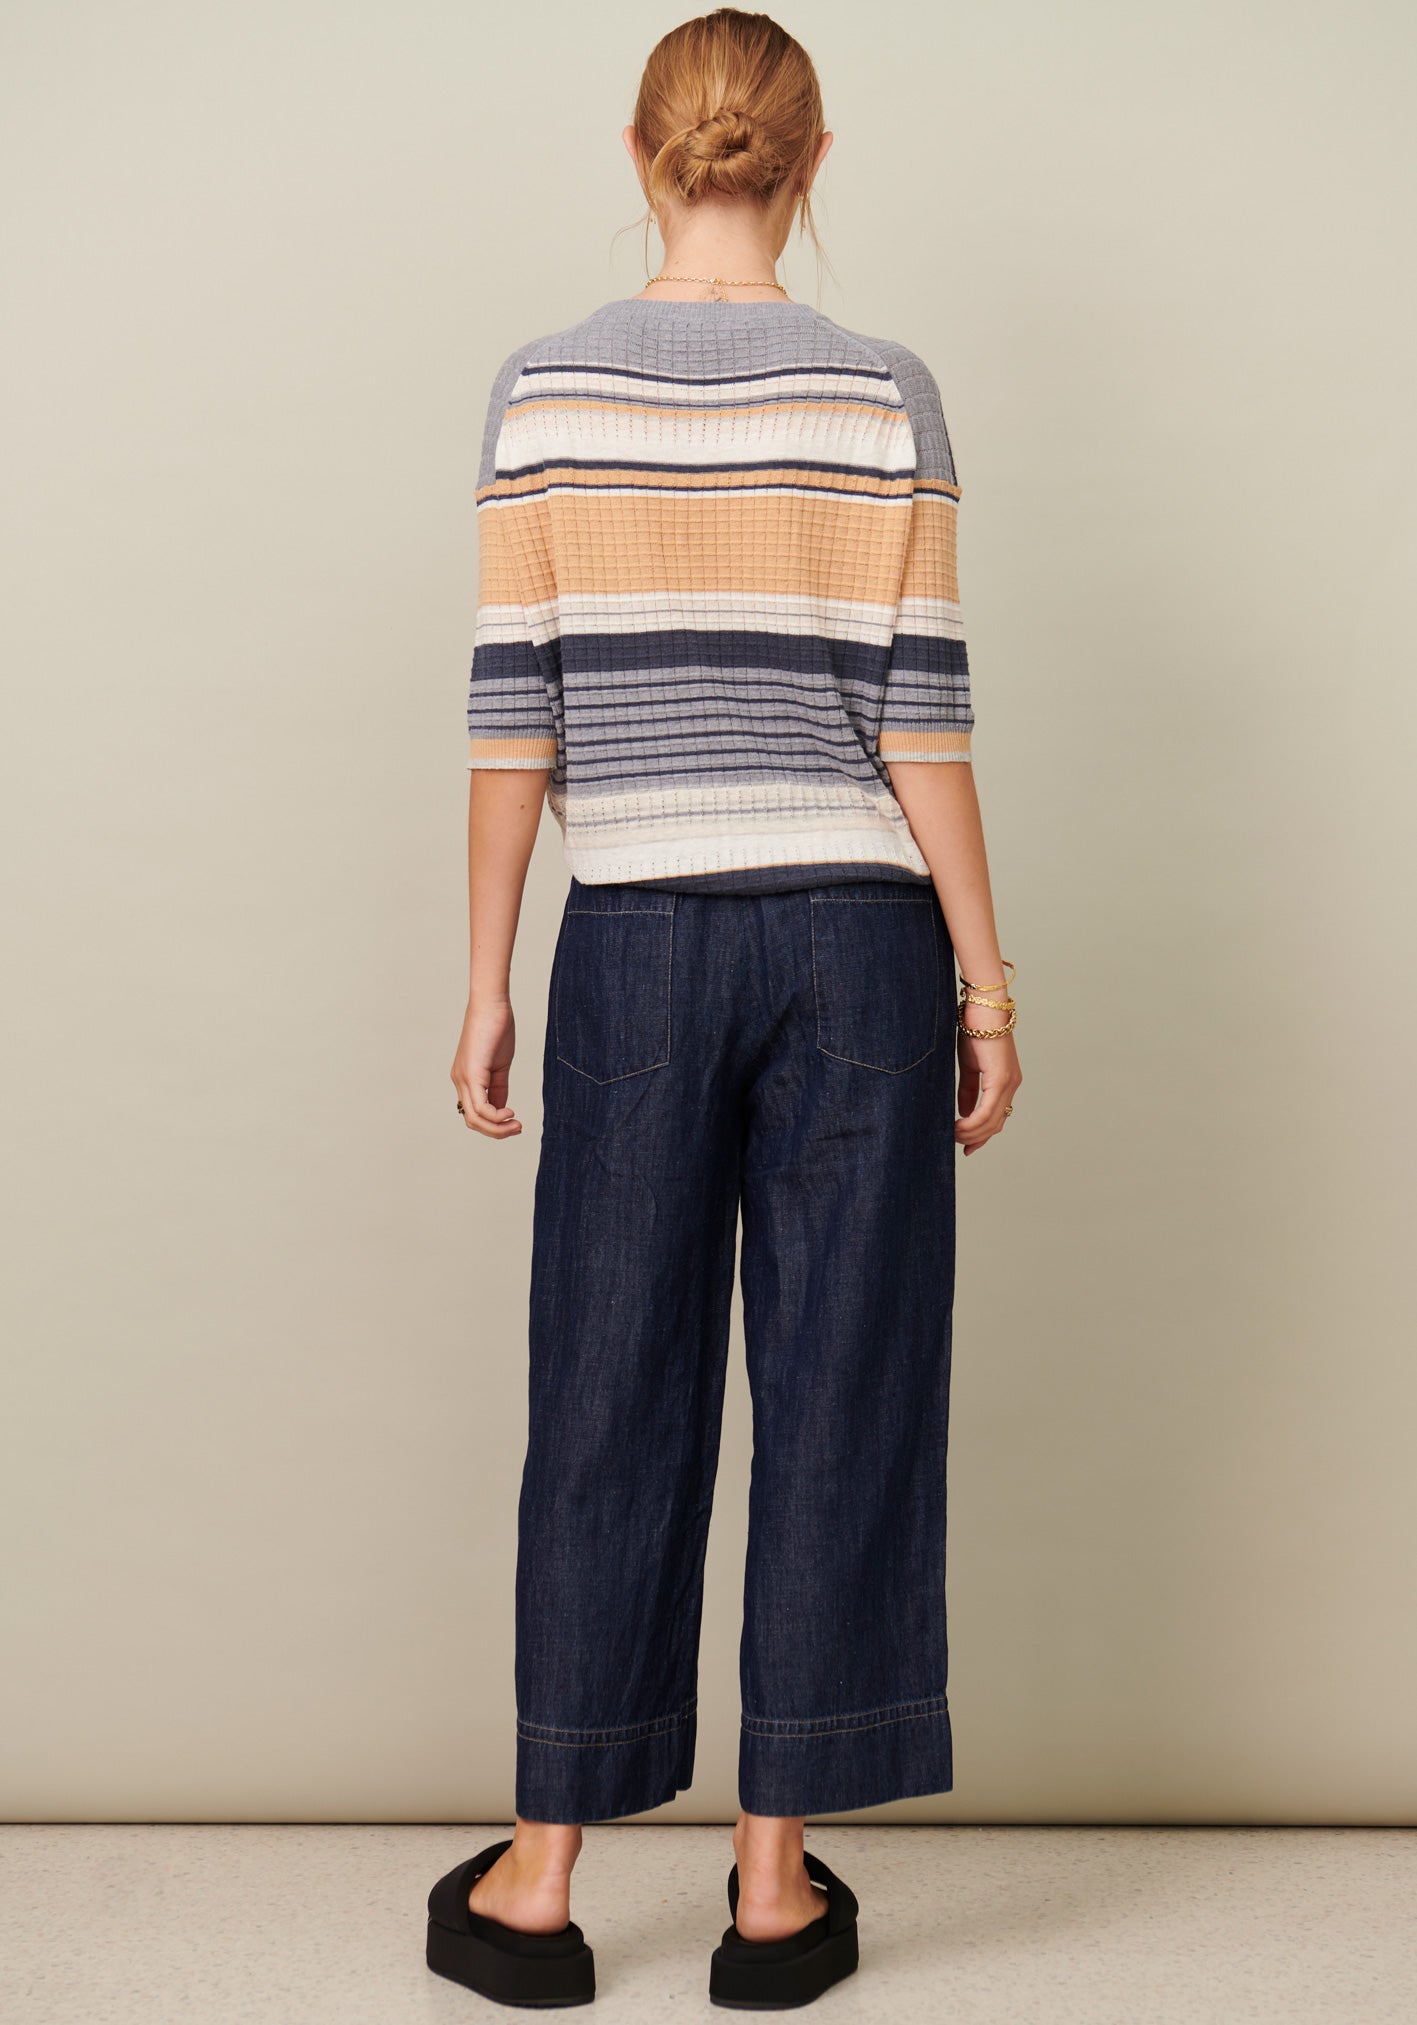 Pol Chloe Knit T-Shirt - Cool